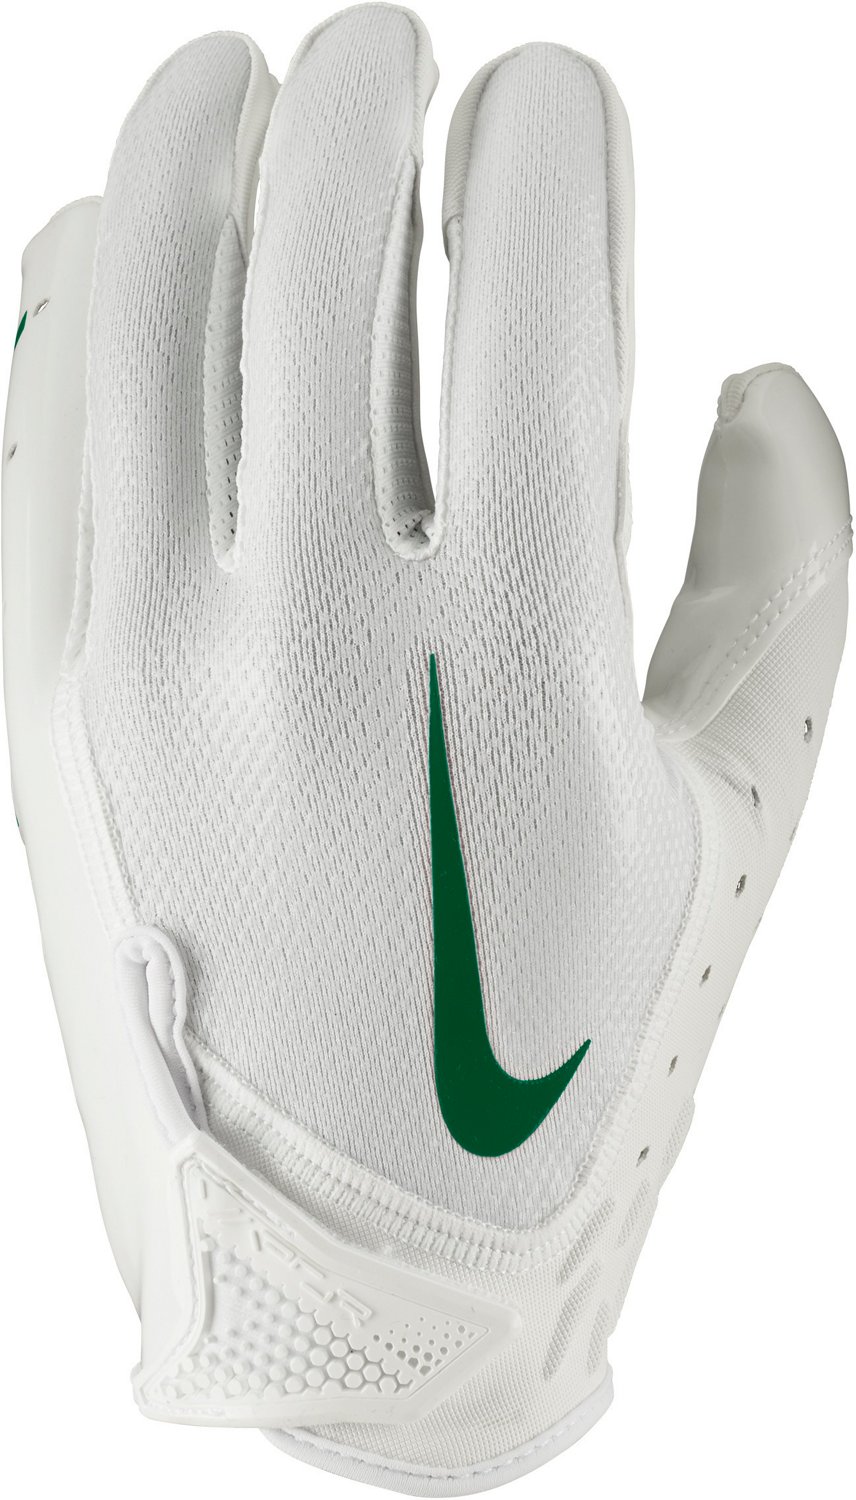 Nike Adults Vapor Jet 7.0 Football Gloves